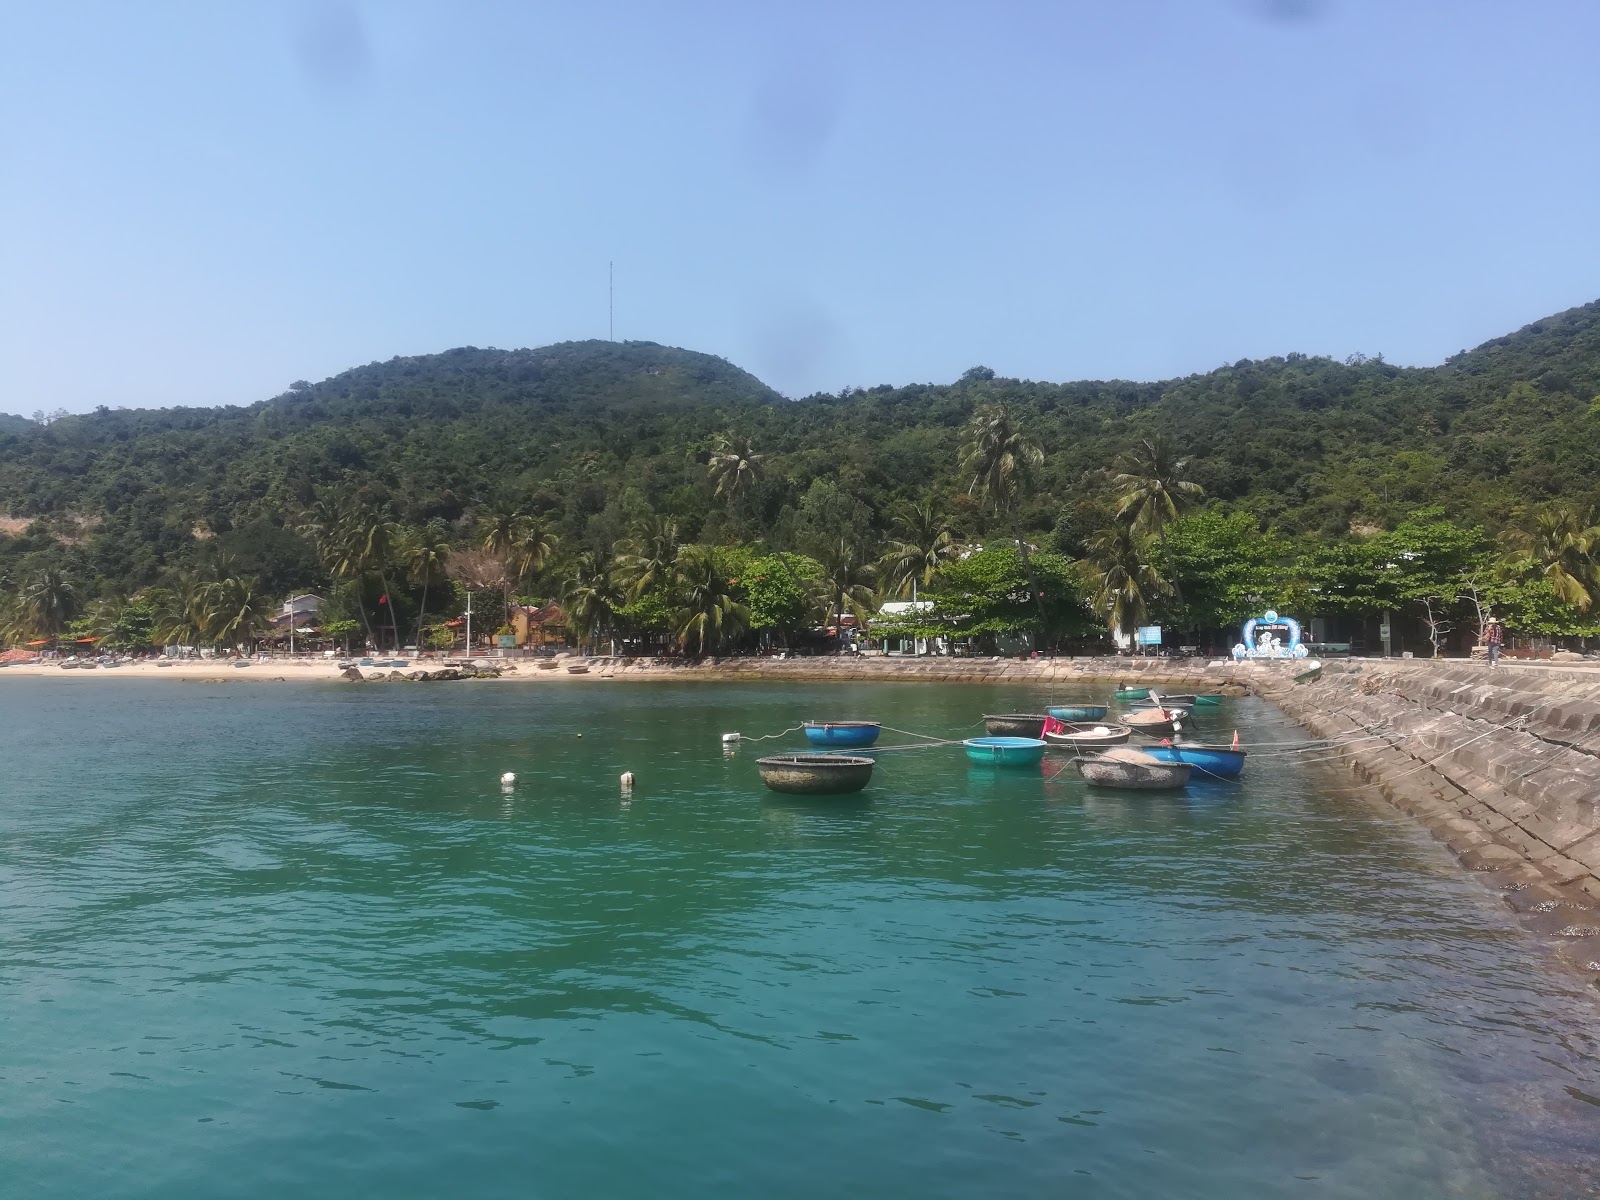 Foto de Perfume Beach - lugar popular entre os apreciadores de relaxamento